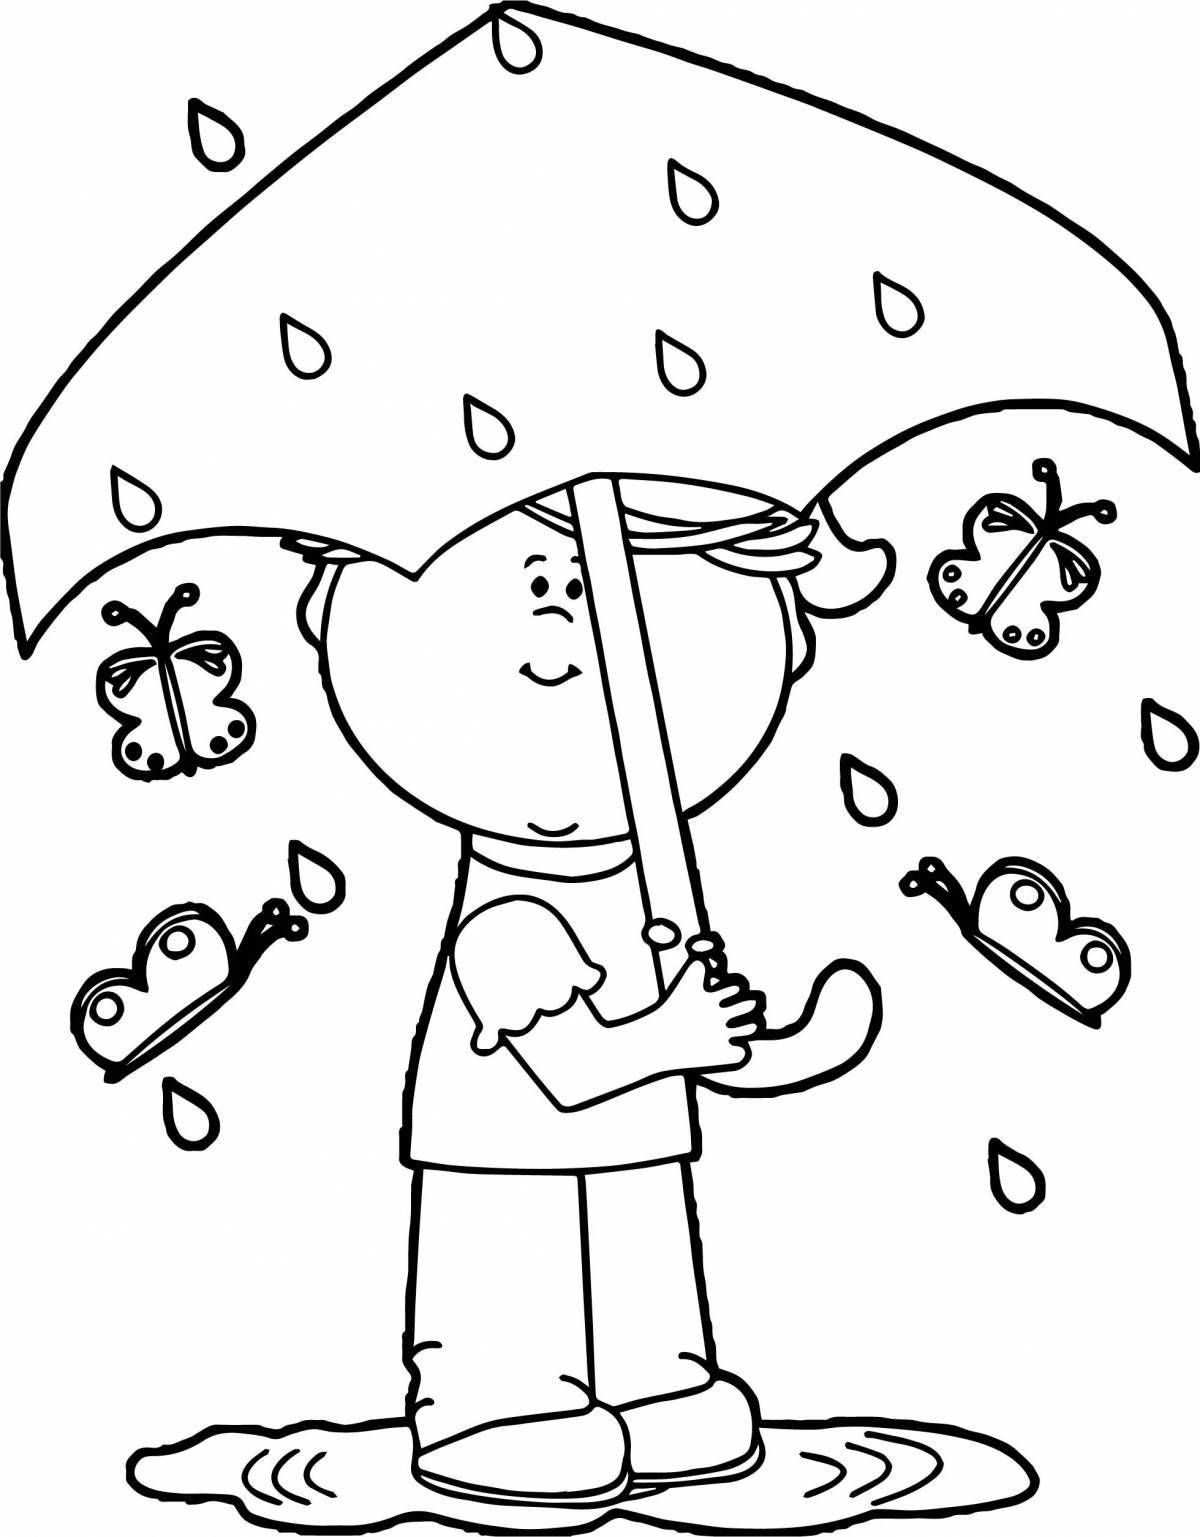 Cute coloring girl with umbrella